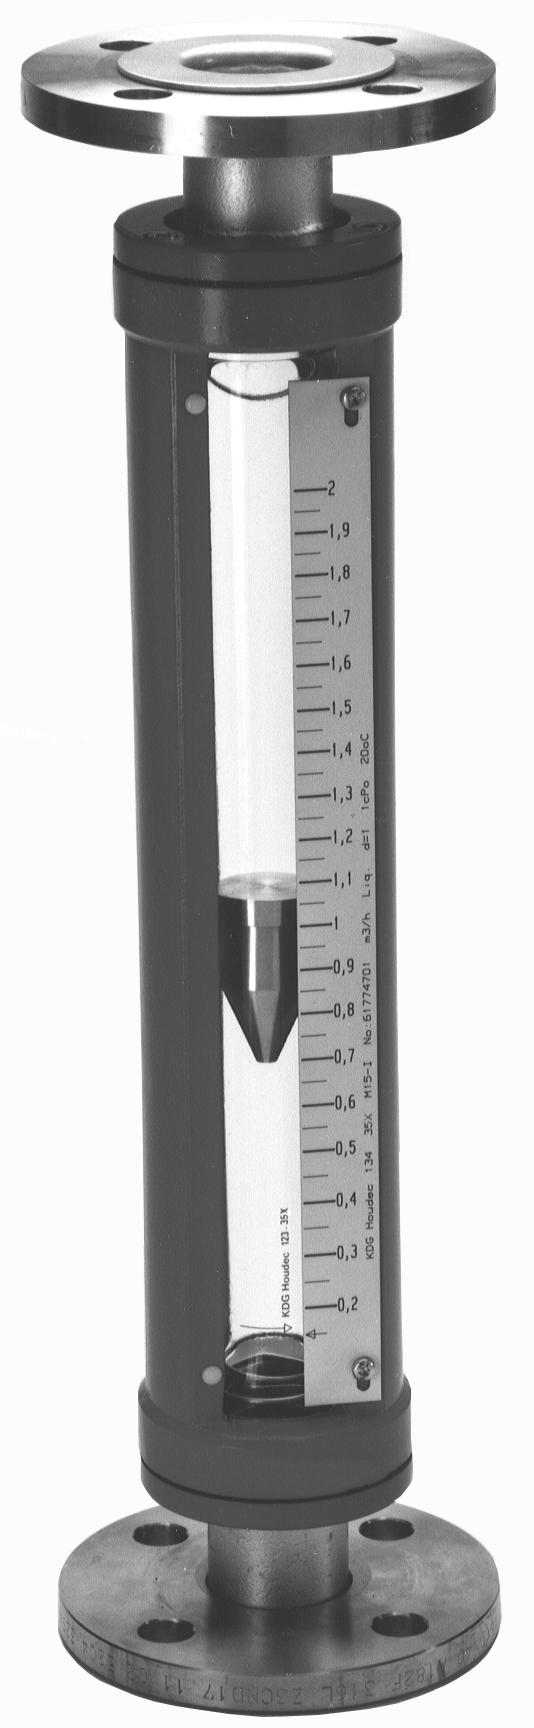 process measurement solutions 3 Rotameter Series 3 glass tube variable area flowmeter Data sheet 70 A 